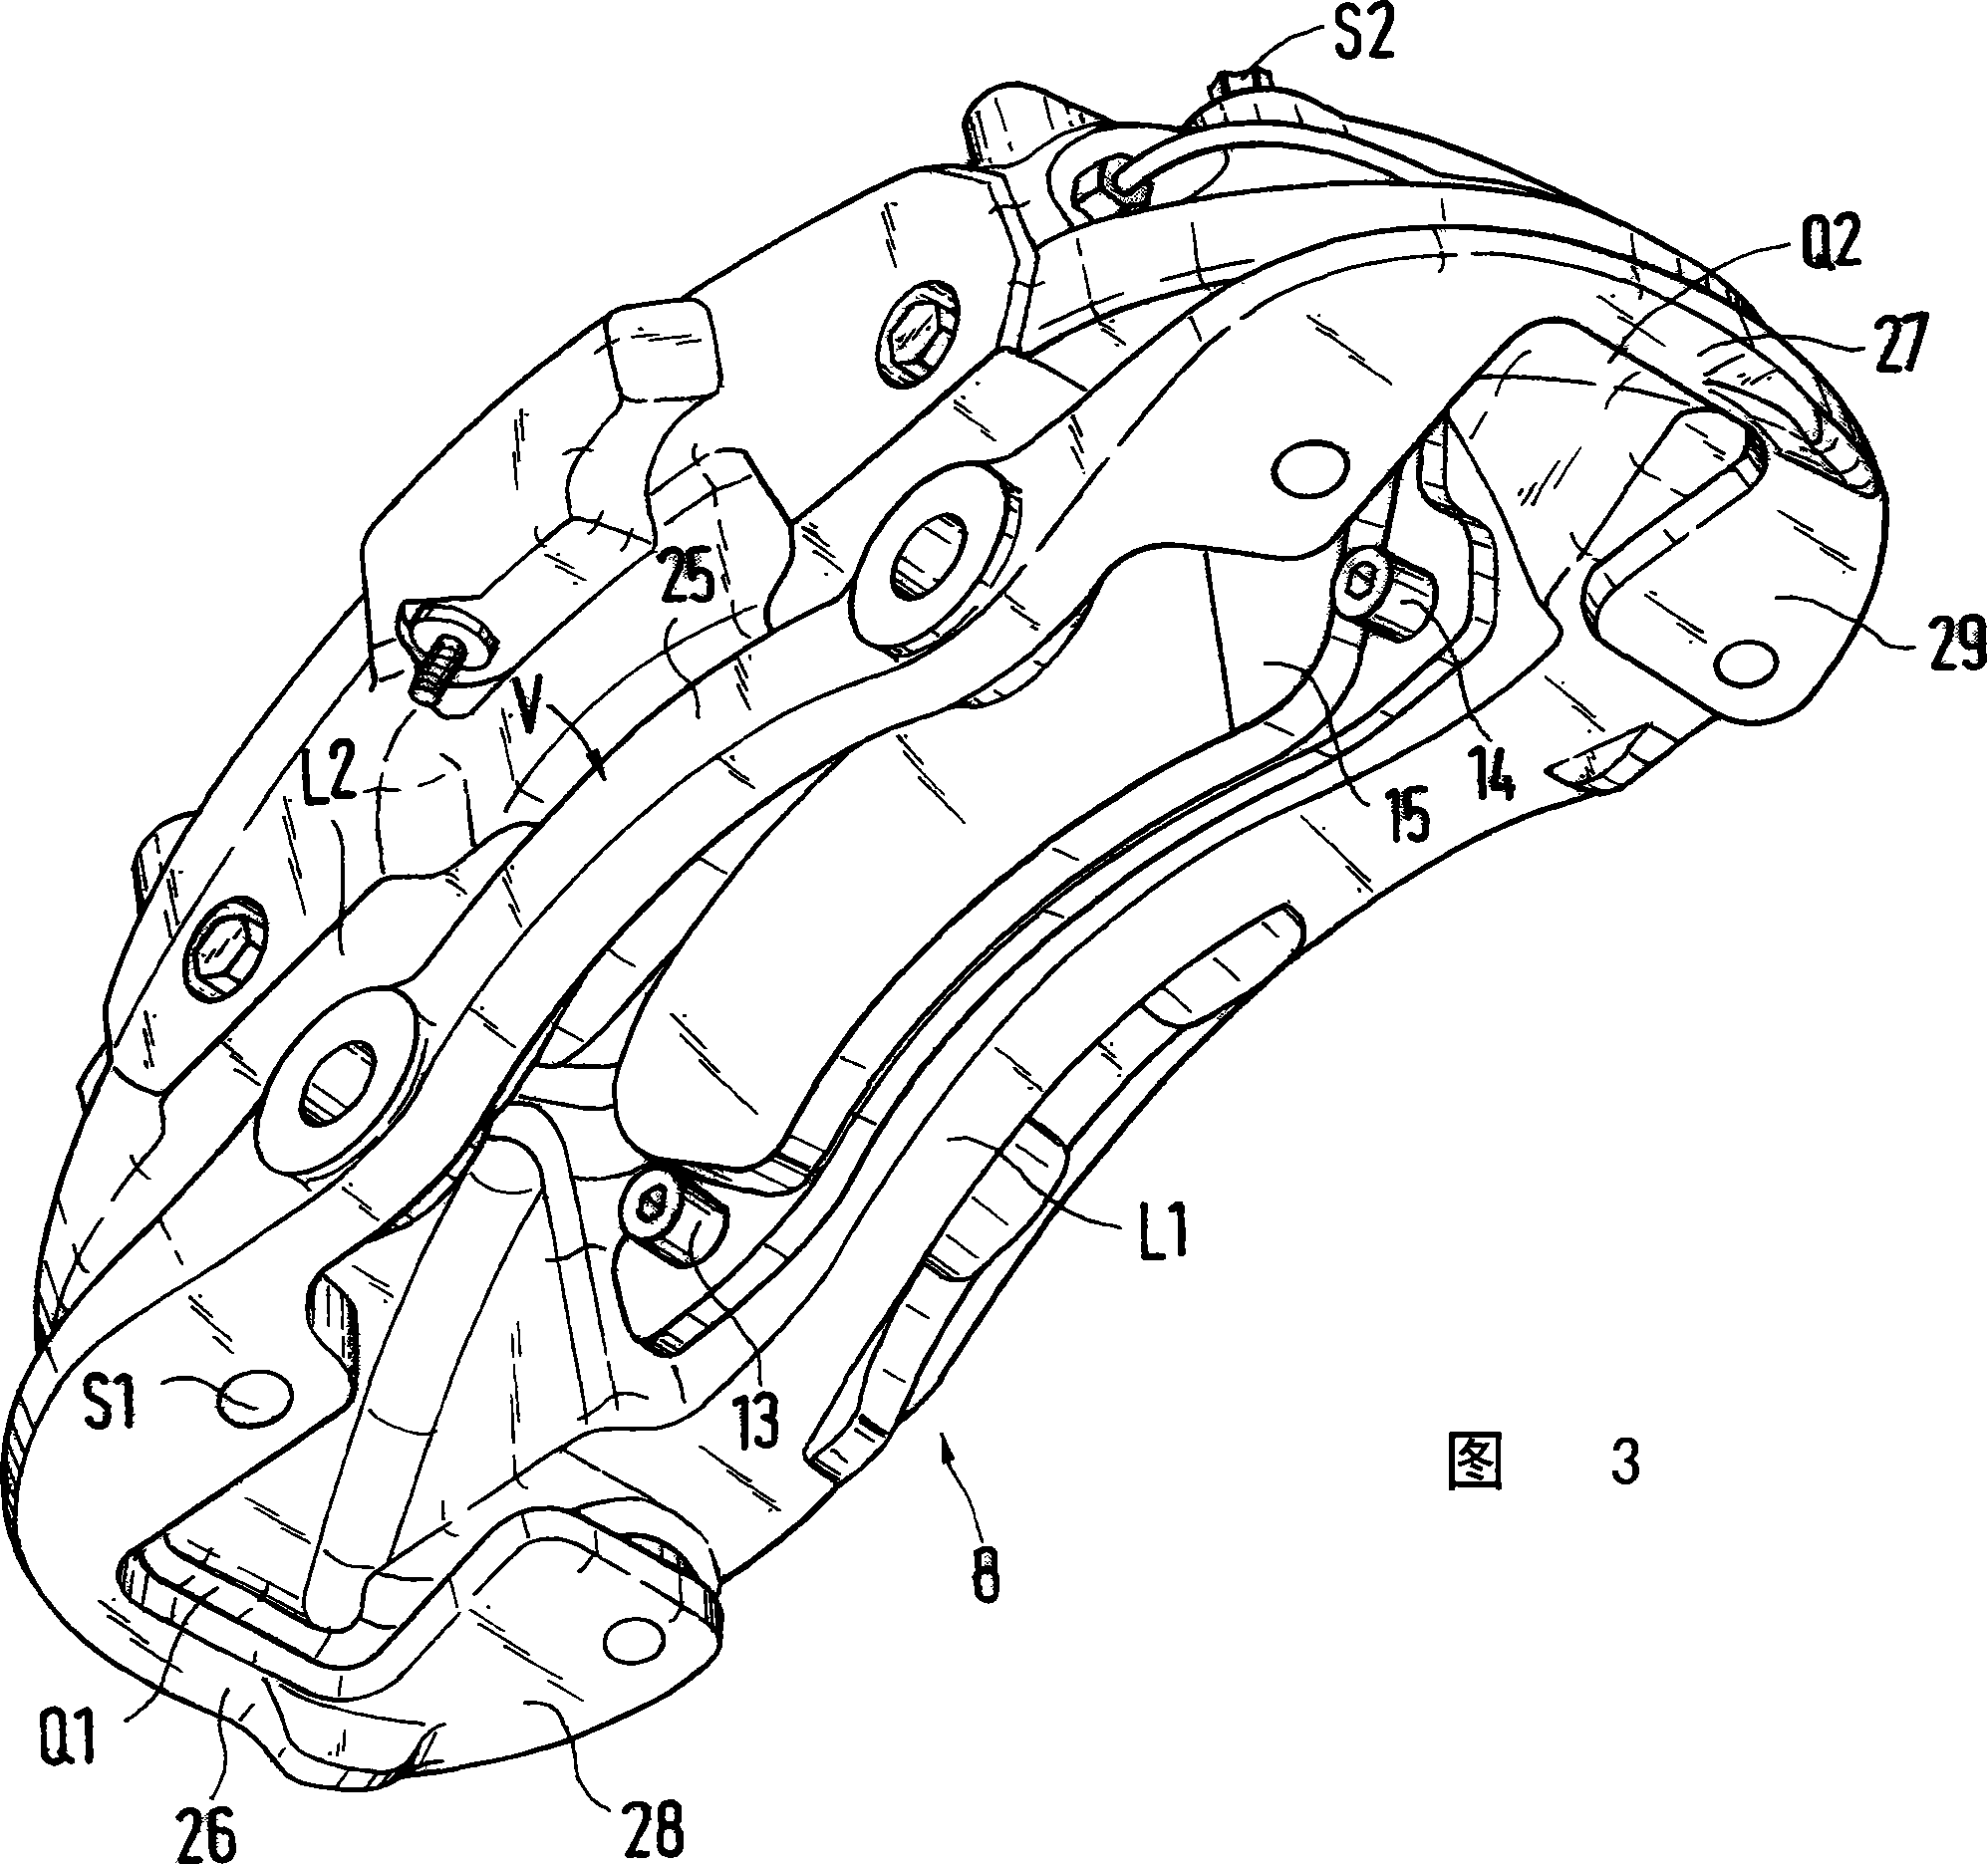 Disc brake calliper for a motor vehicle